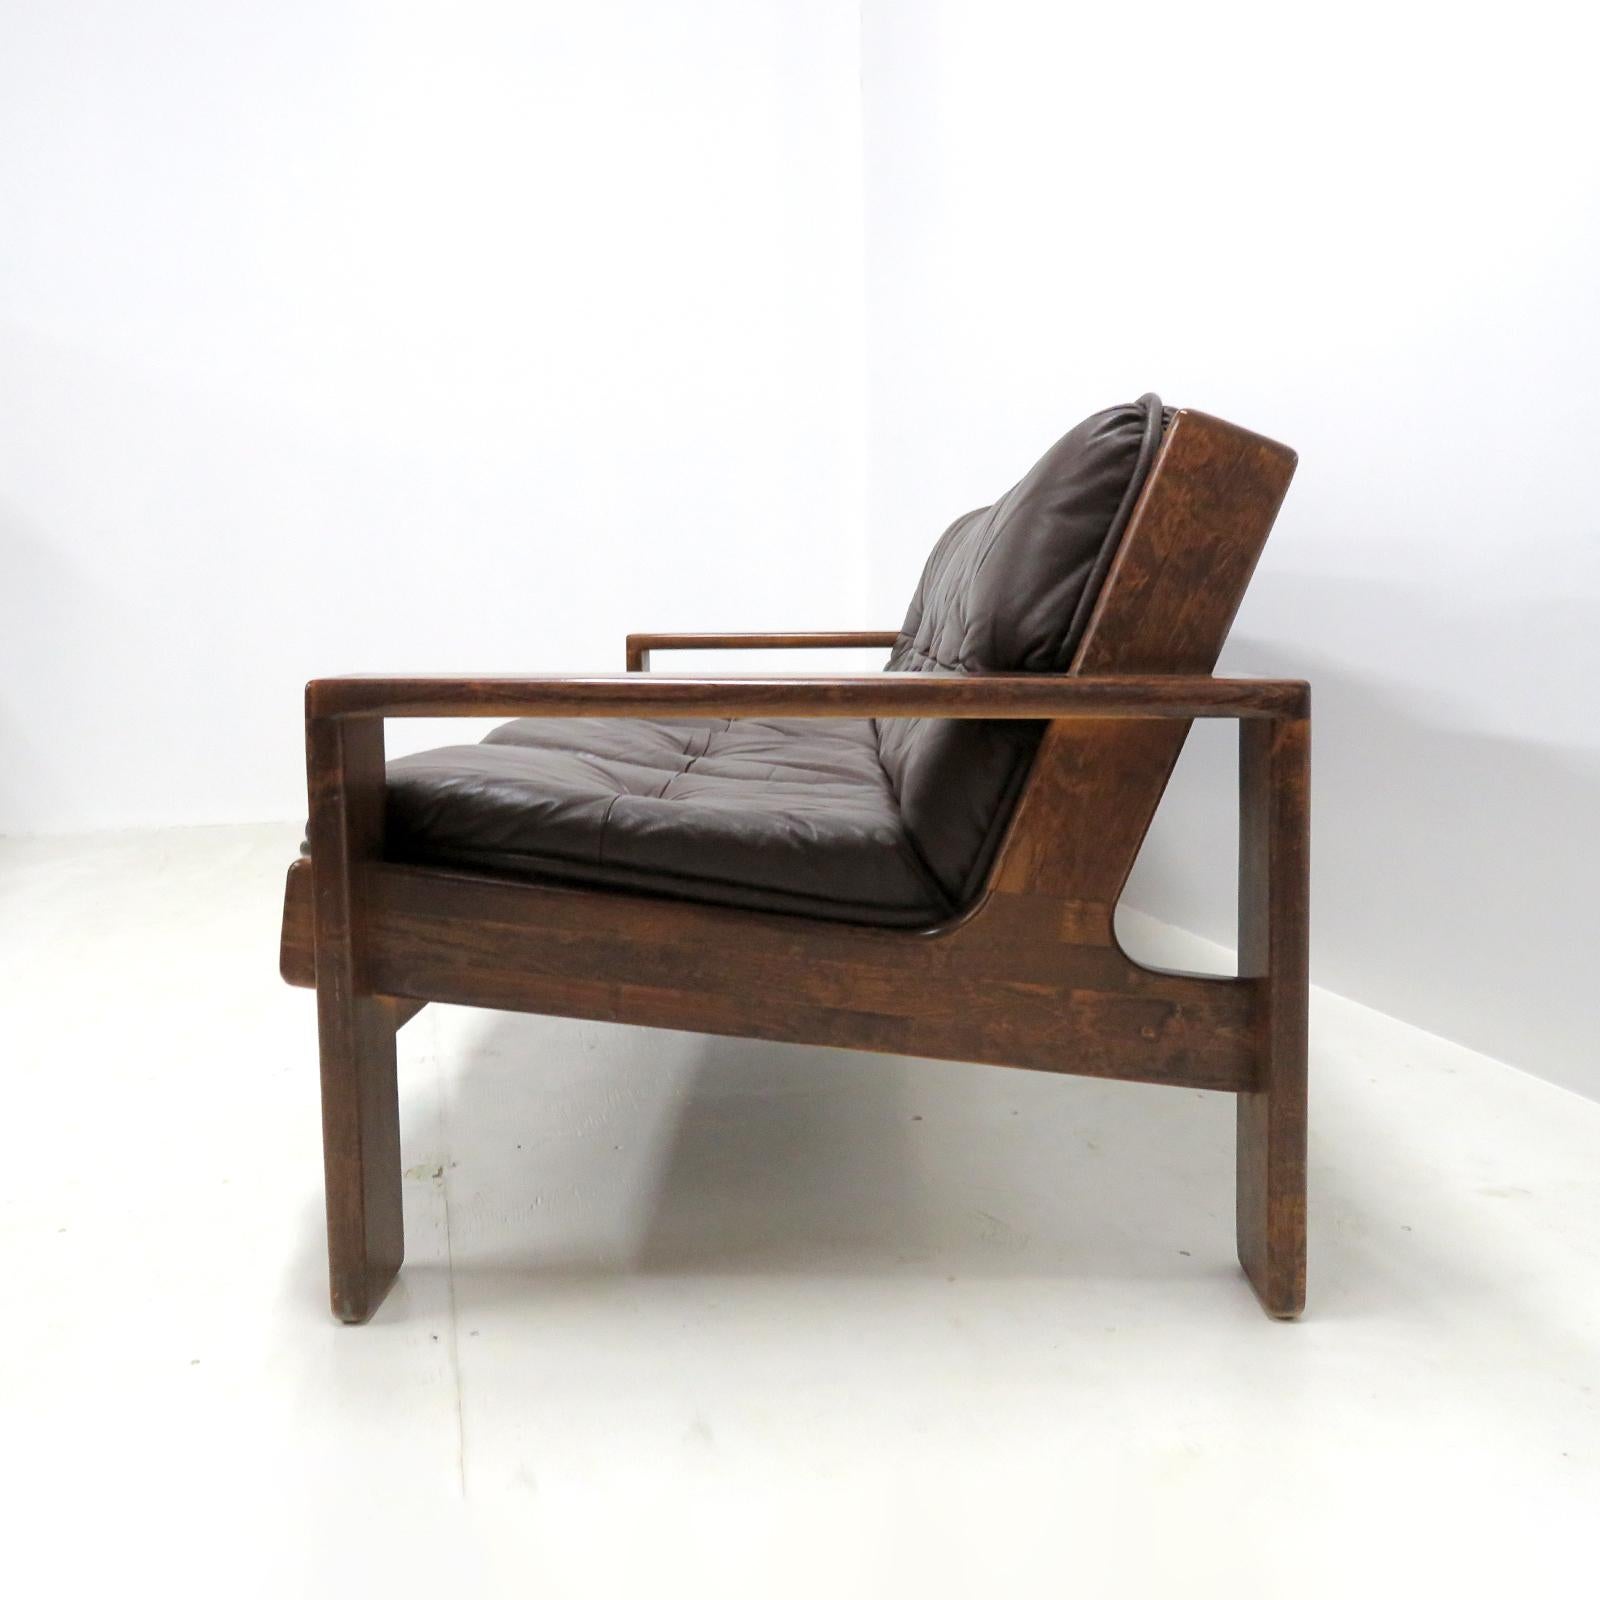 Esko Pajamies 'Bonanza' Leather Sofa, 1970 In Good Condition For Sale In Los Angeles, CA